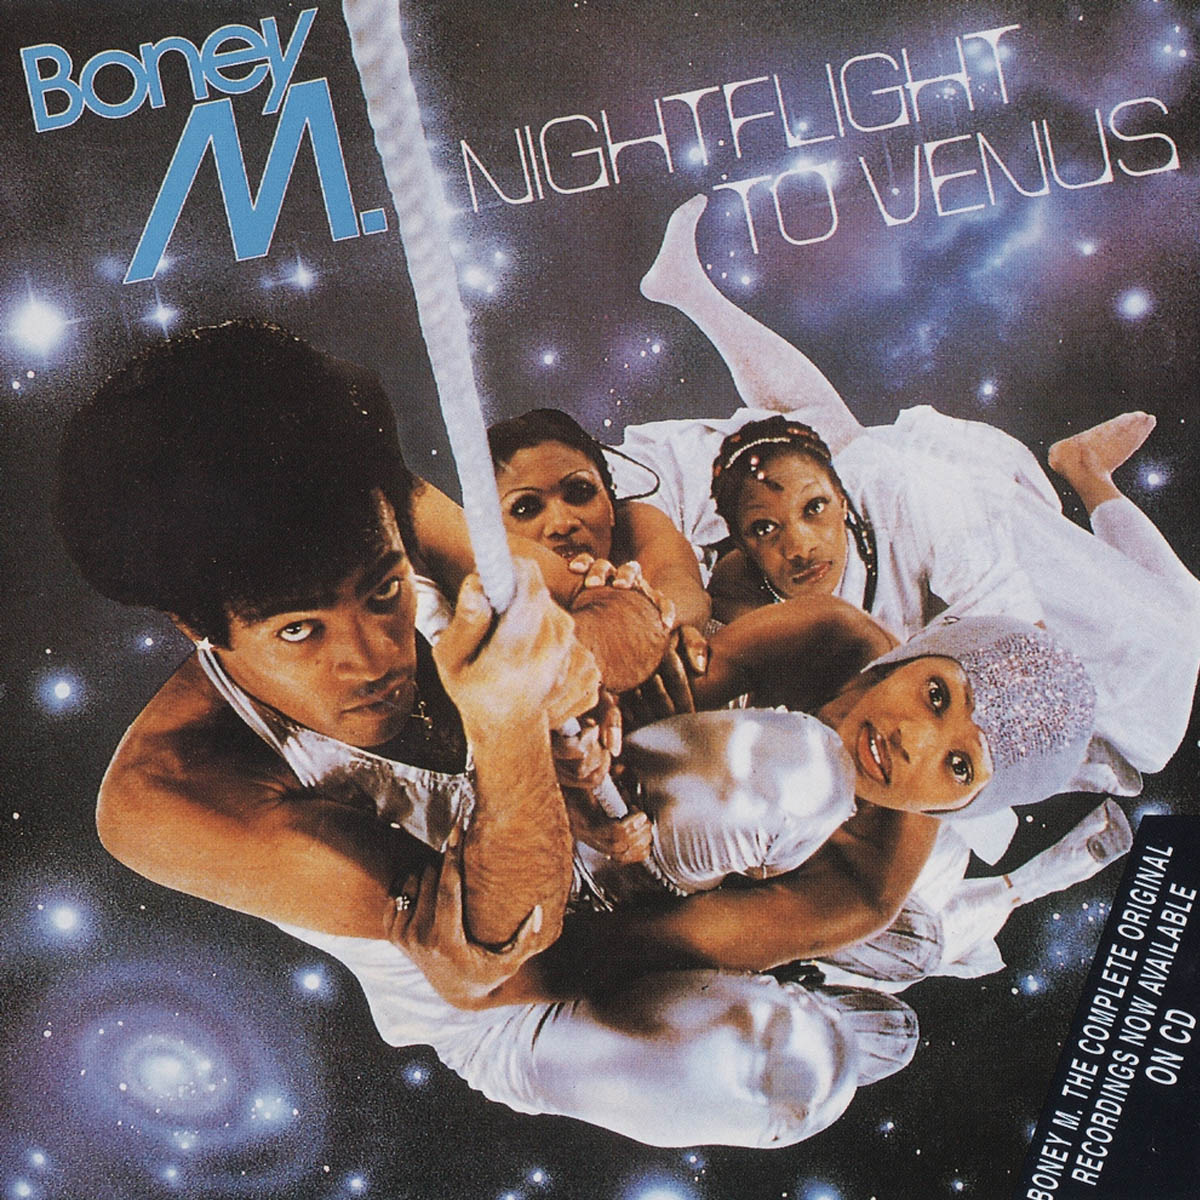 Album cover of "Nightflight to Venus" (1078) by Boney M.